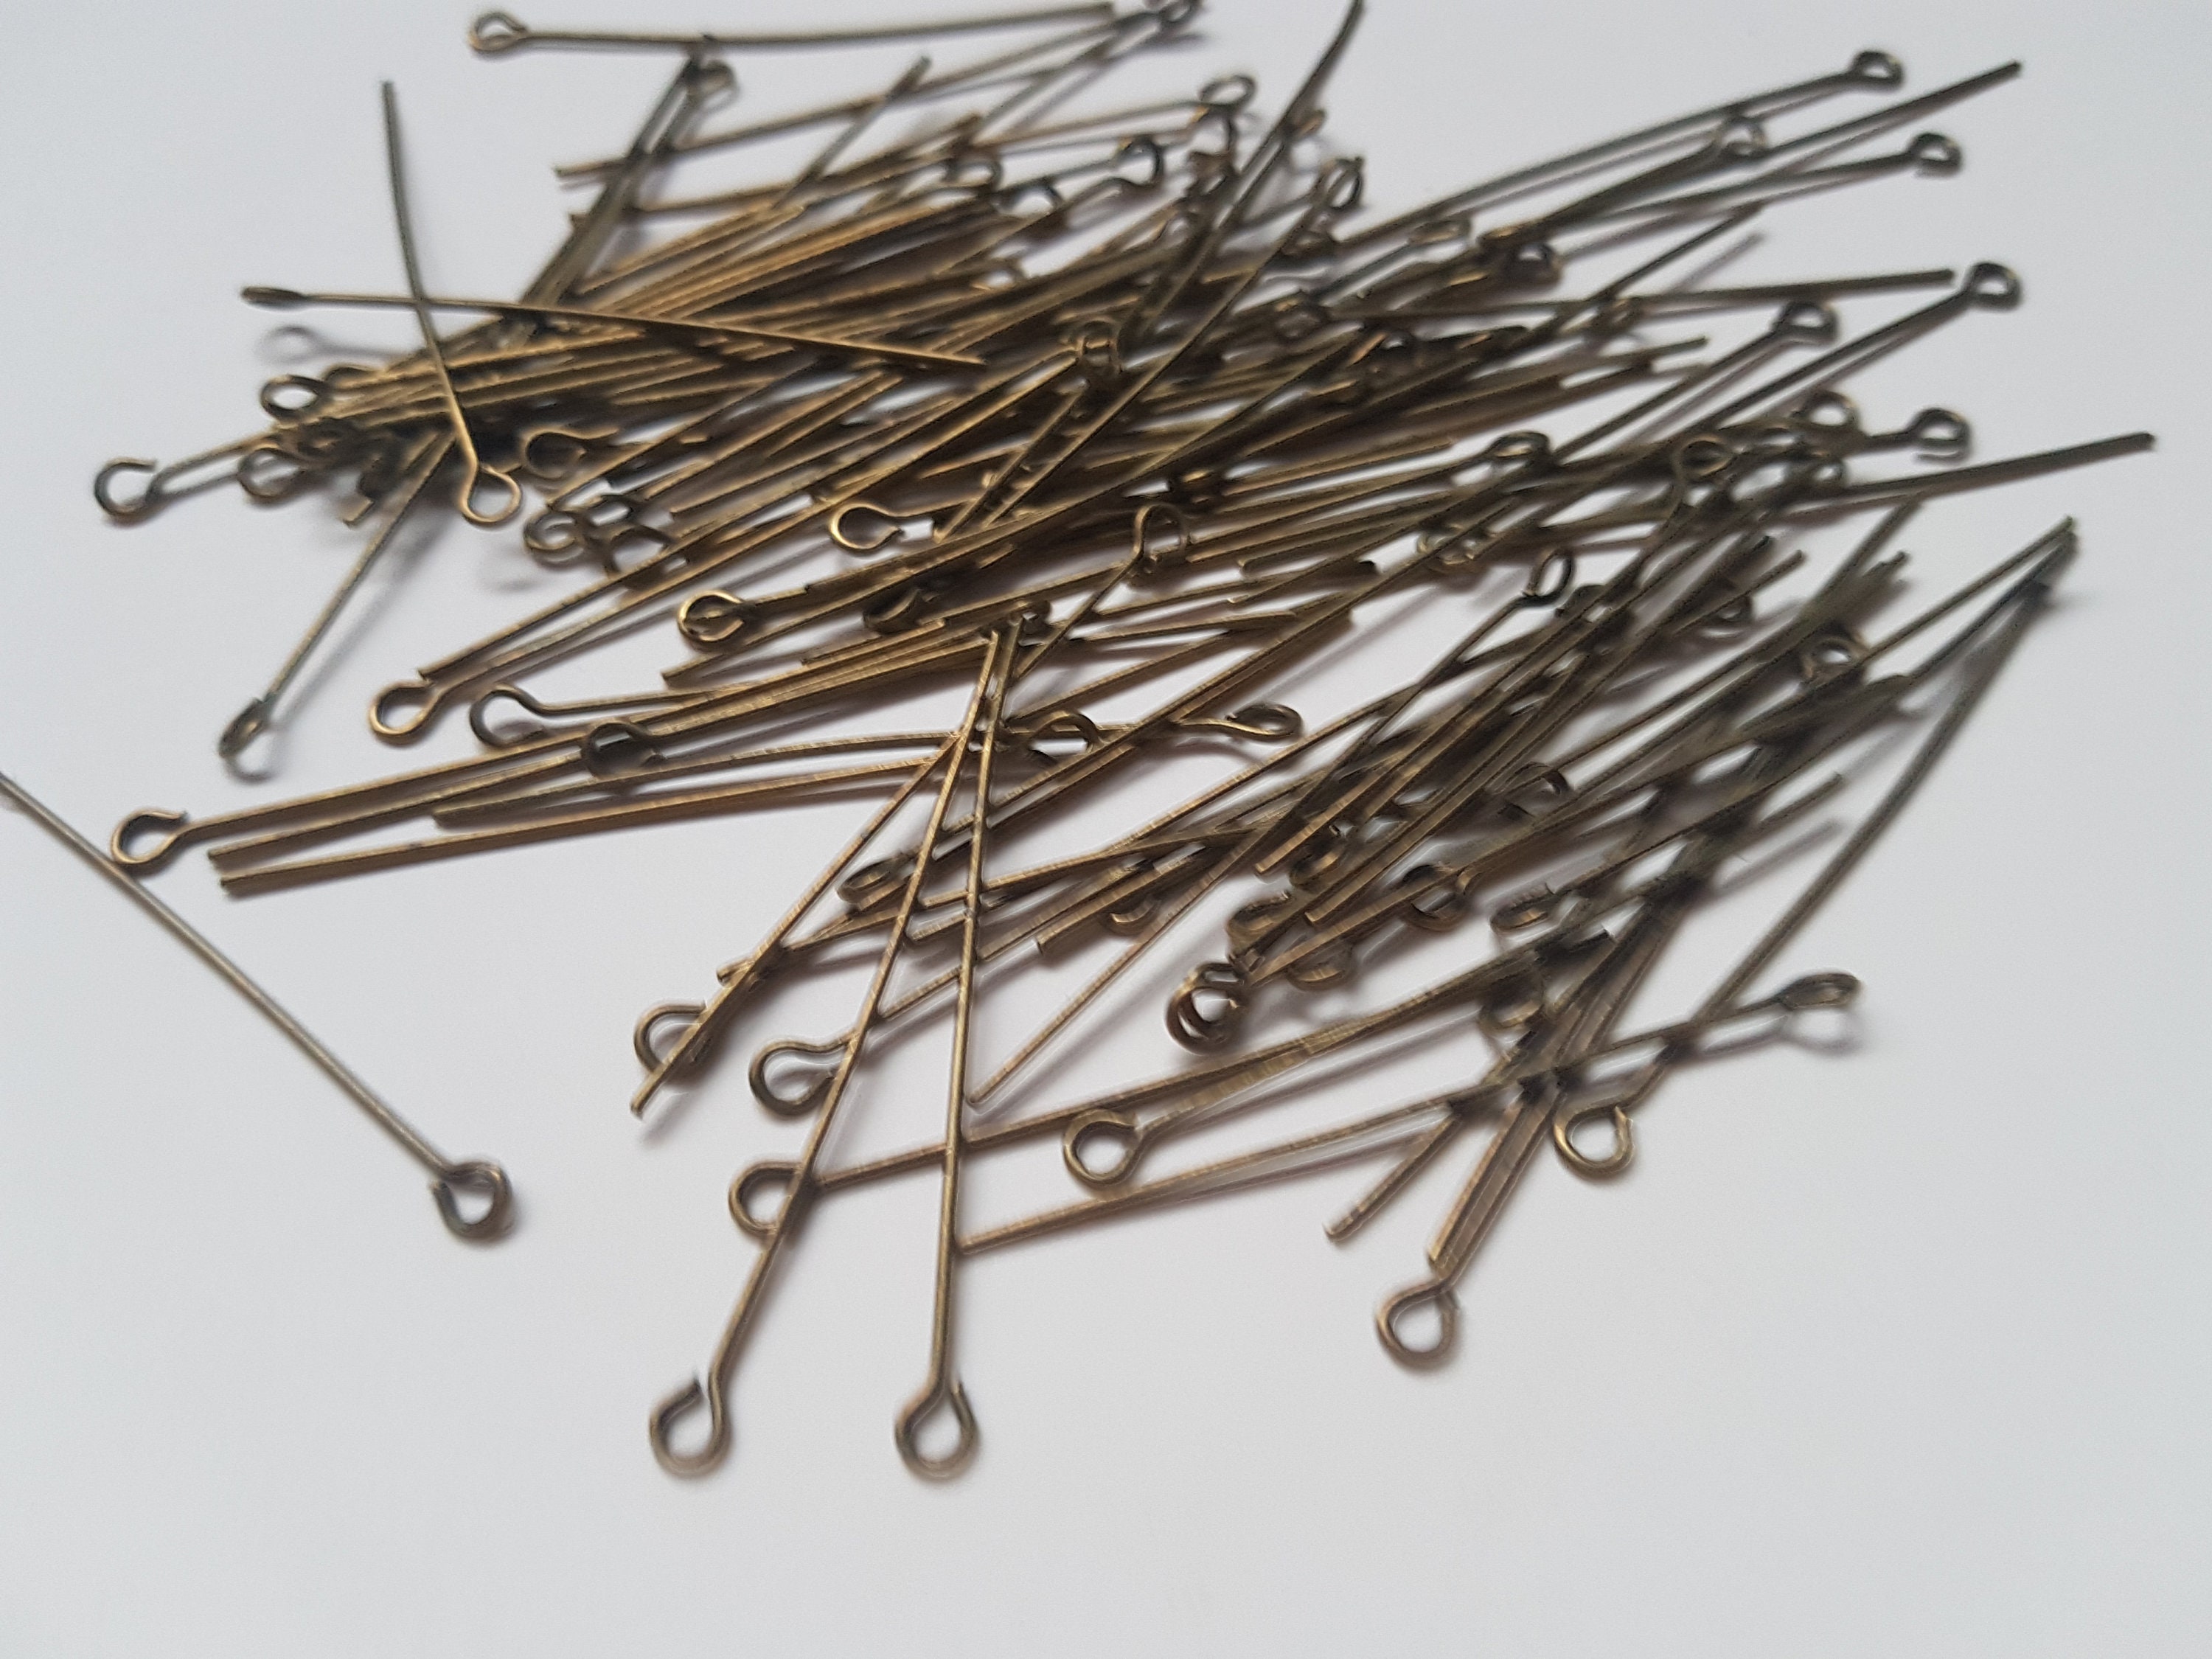 250pc Small Raw Brass Eye Pin 16mm Length, 21ga Wire Eyepins for